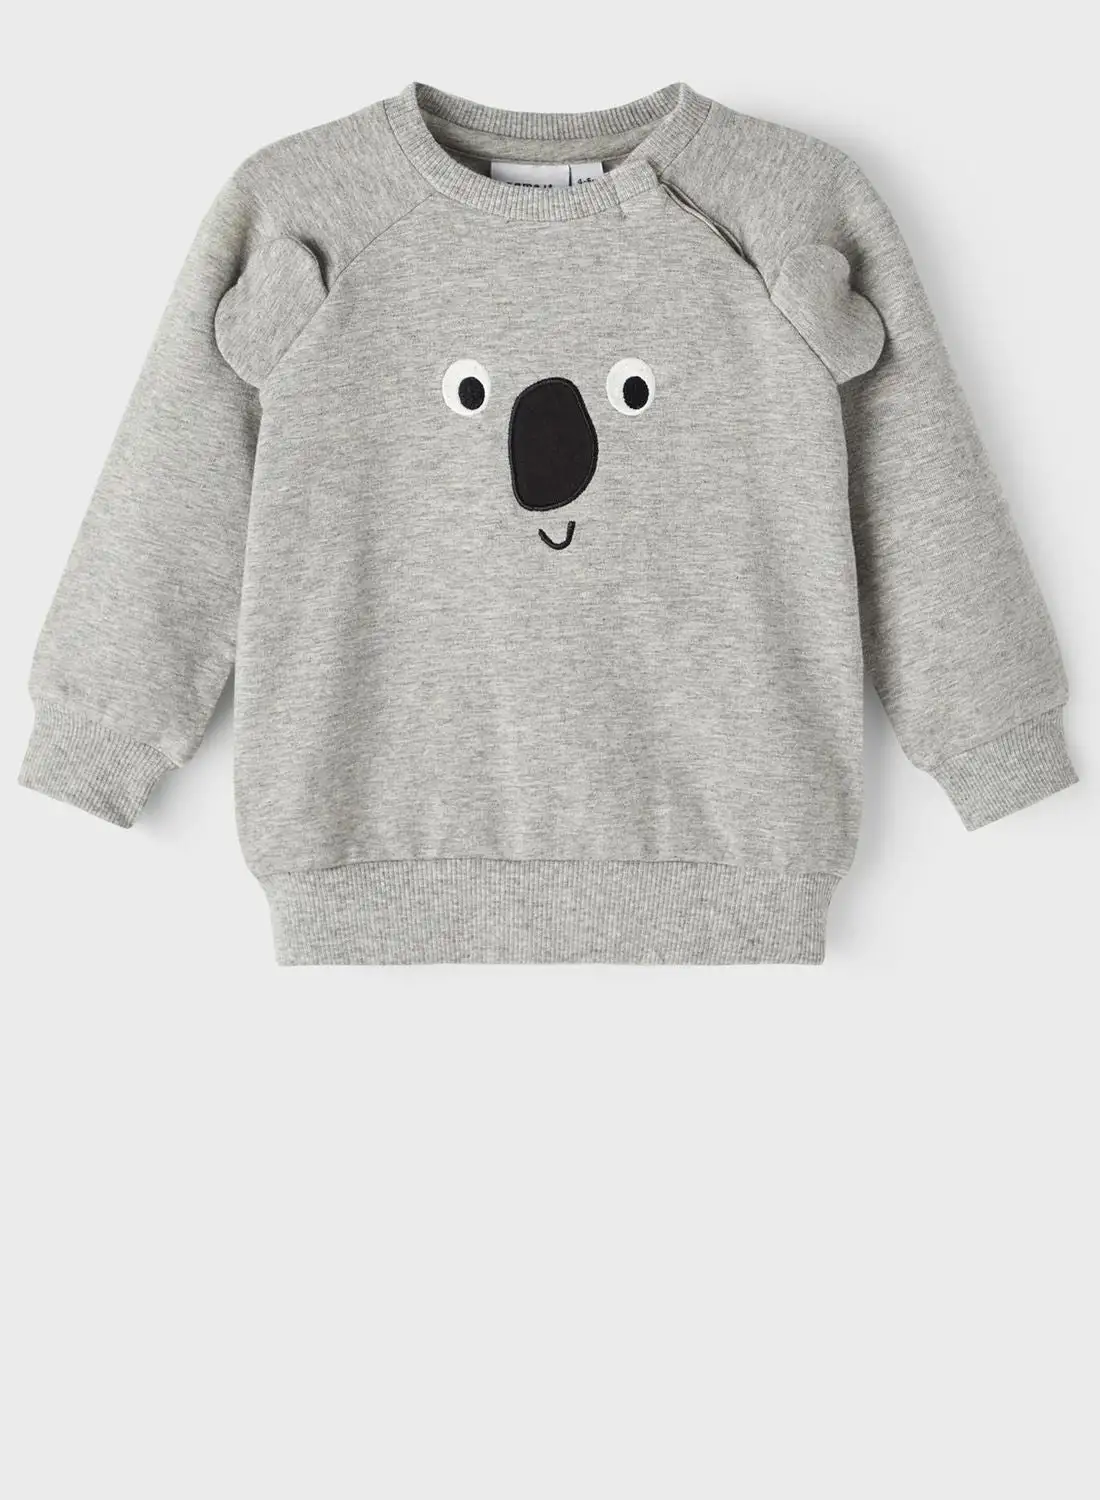 NAME IT Infant Koala Detail Sweatshirt